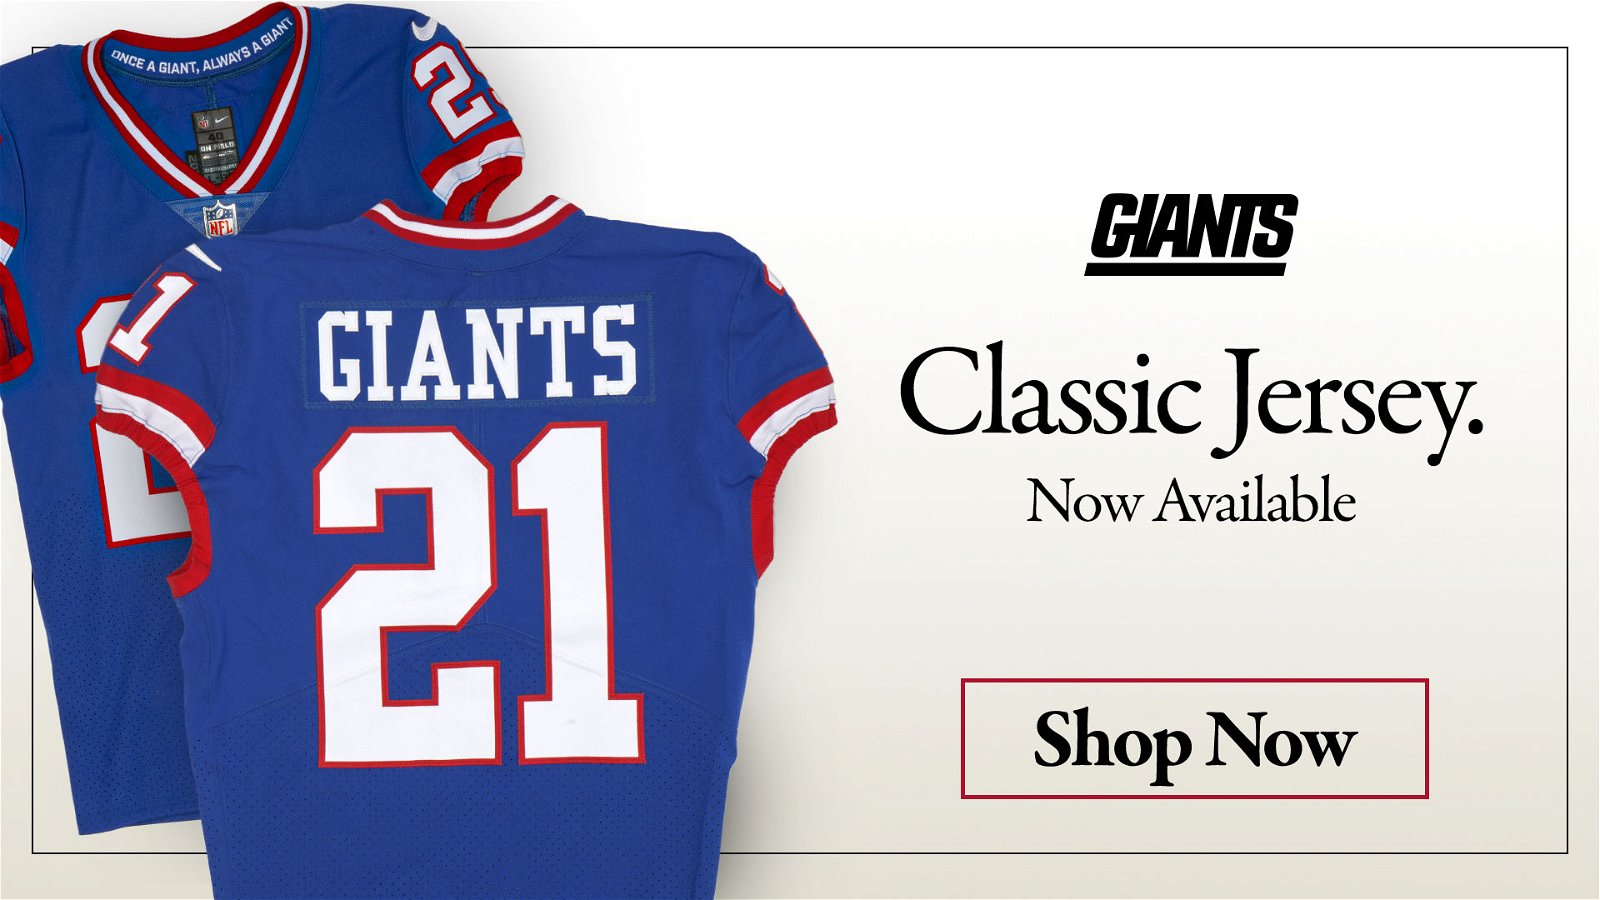 NY Giants Debut New Uniform, Announce Uniform Schedule for 2021